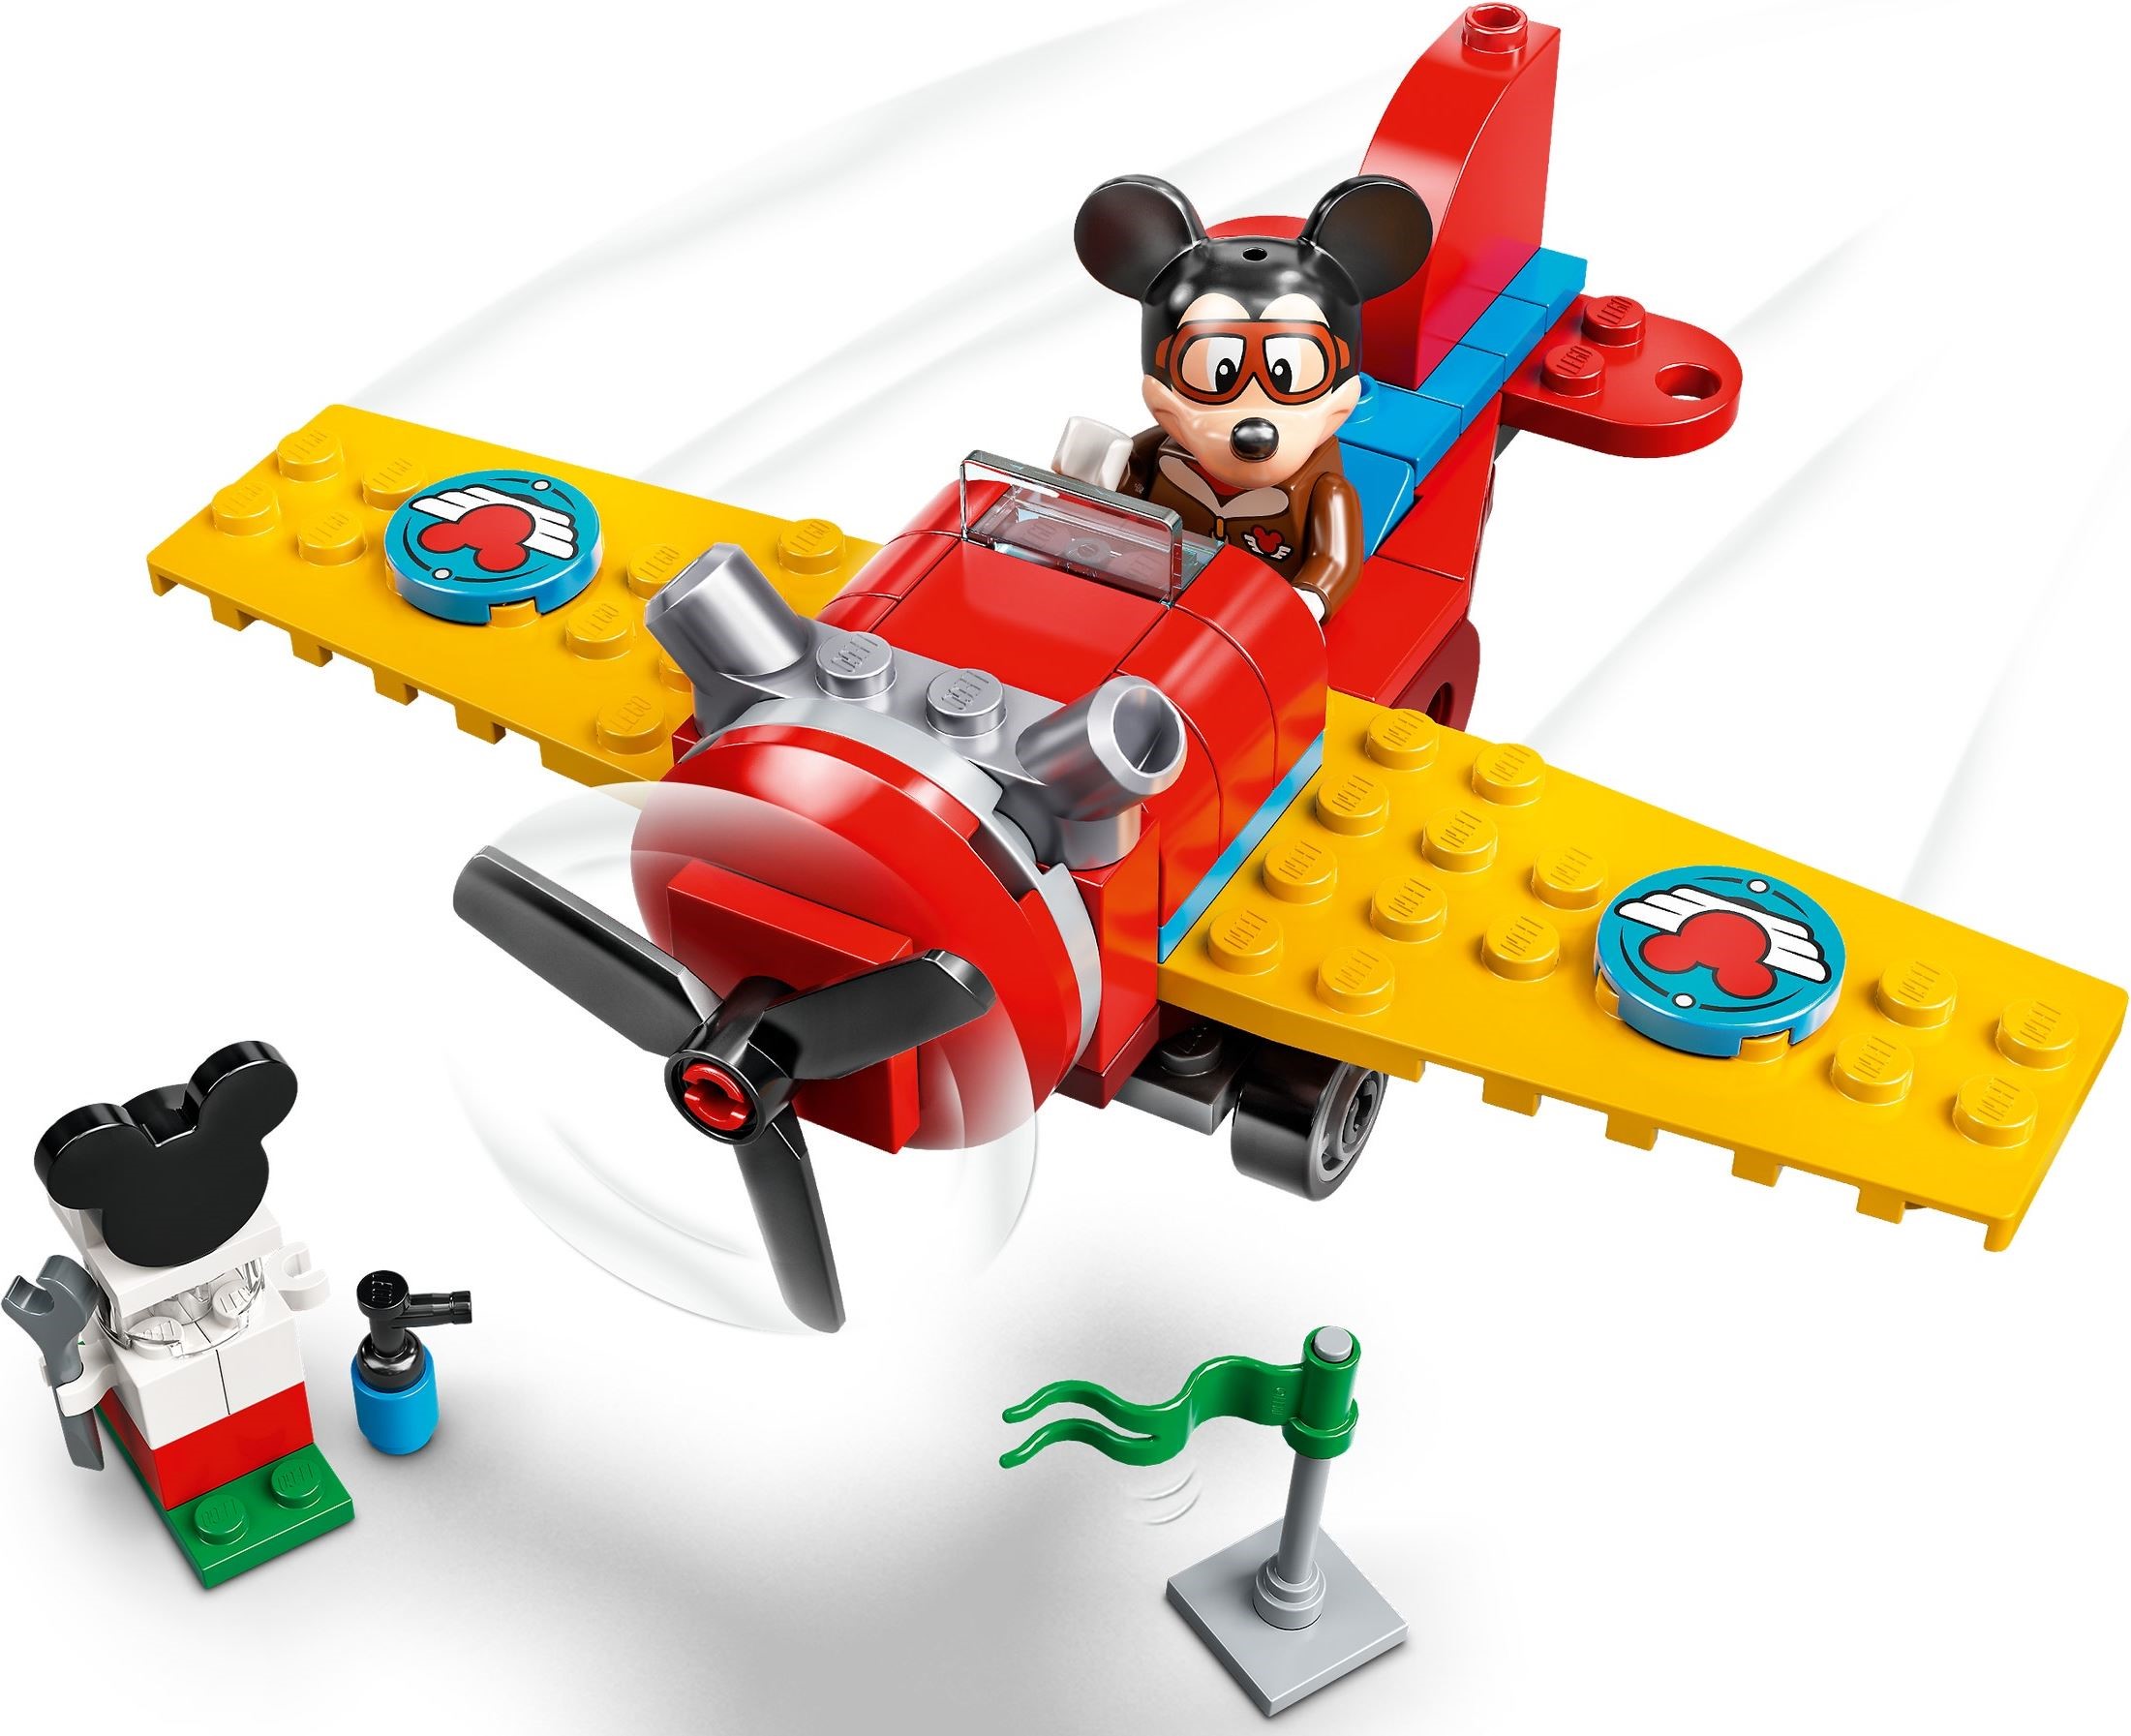 (16x20) Walt Disney Mickey Mouse and Friends Brick  